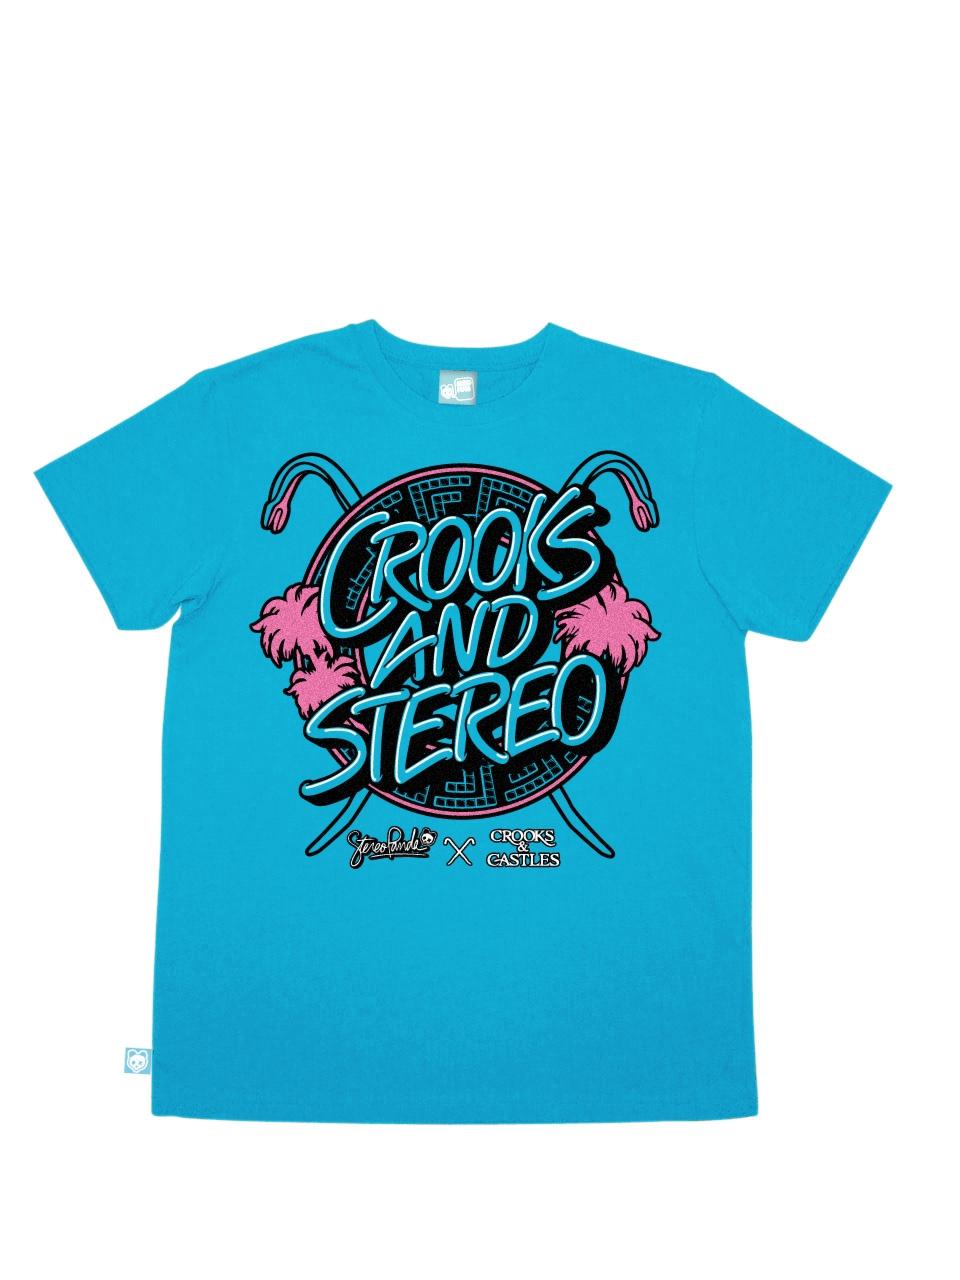 Crooks & Castle x Stereo Panda tee-shirt